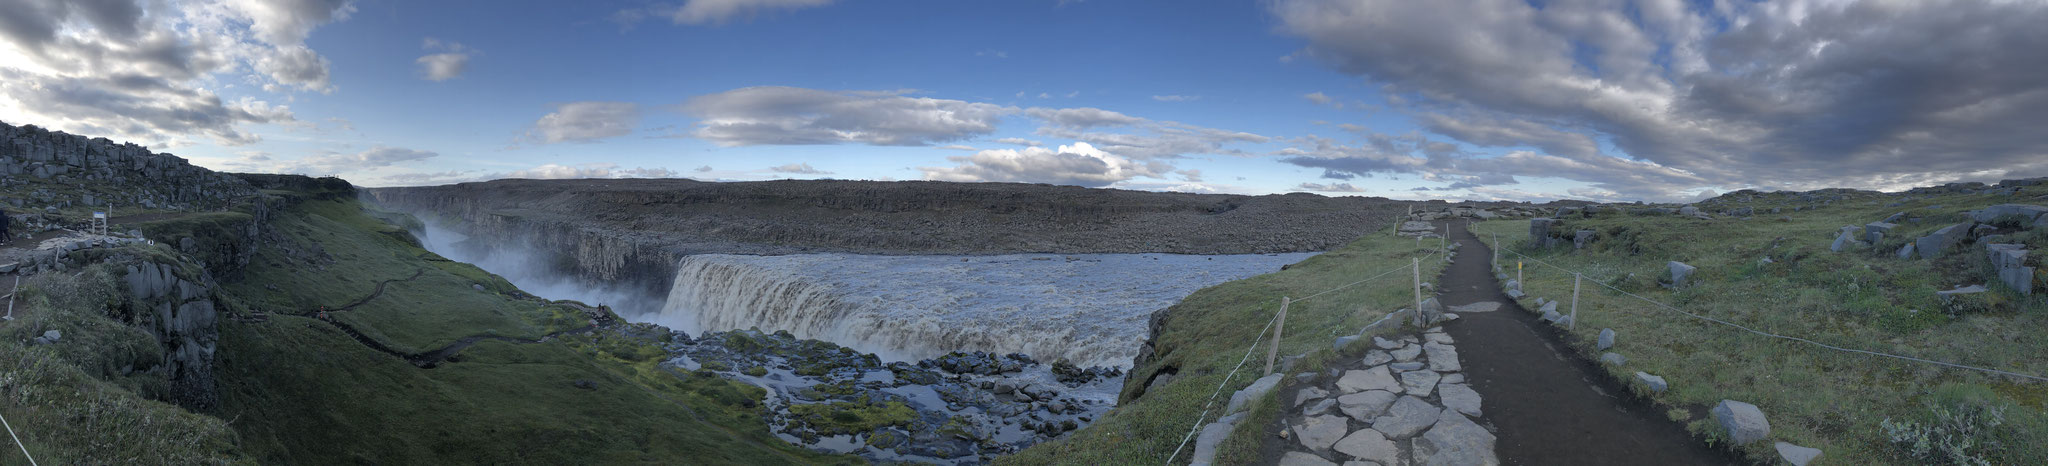 Detifoss Waterfall, Iceland (July 2019)